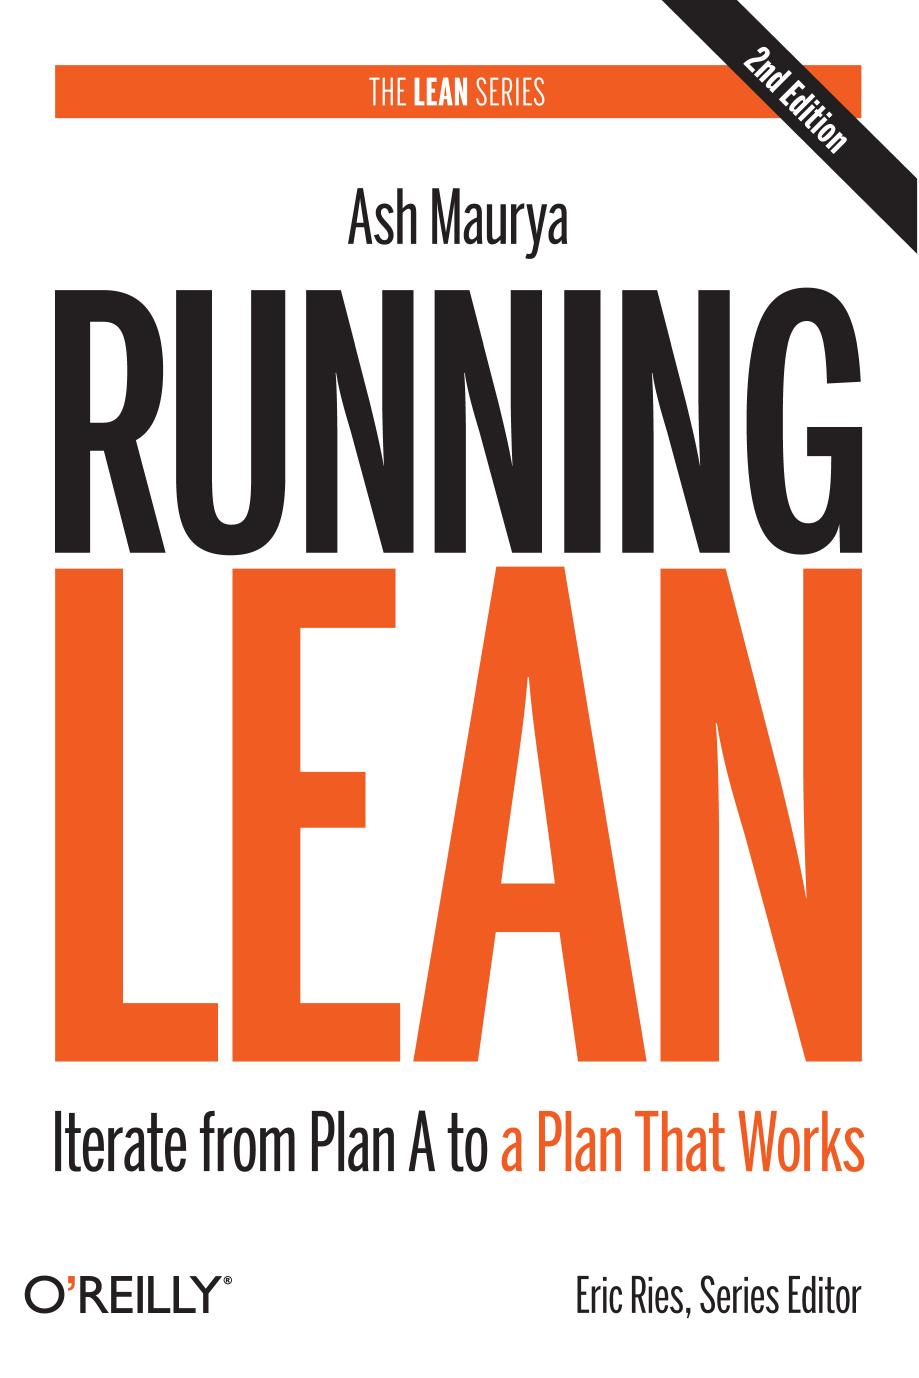 Running Lean, Second Edition by Ash Maurya